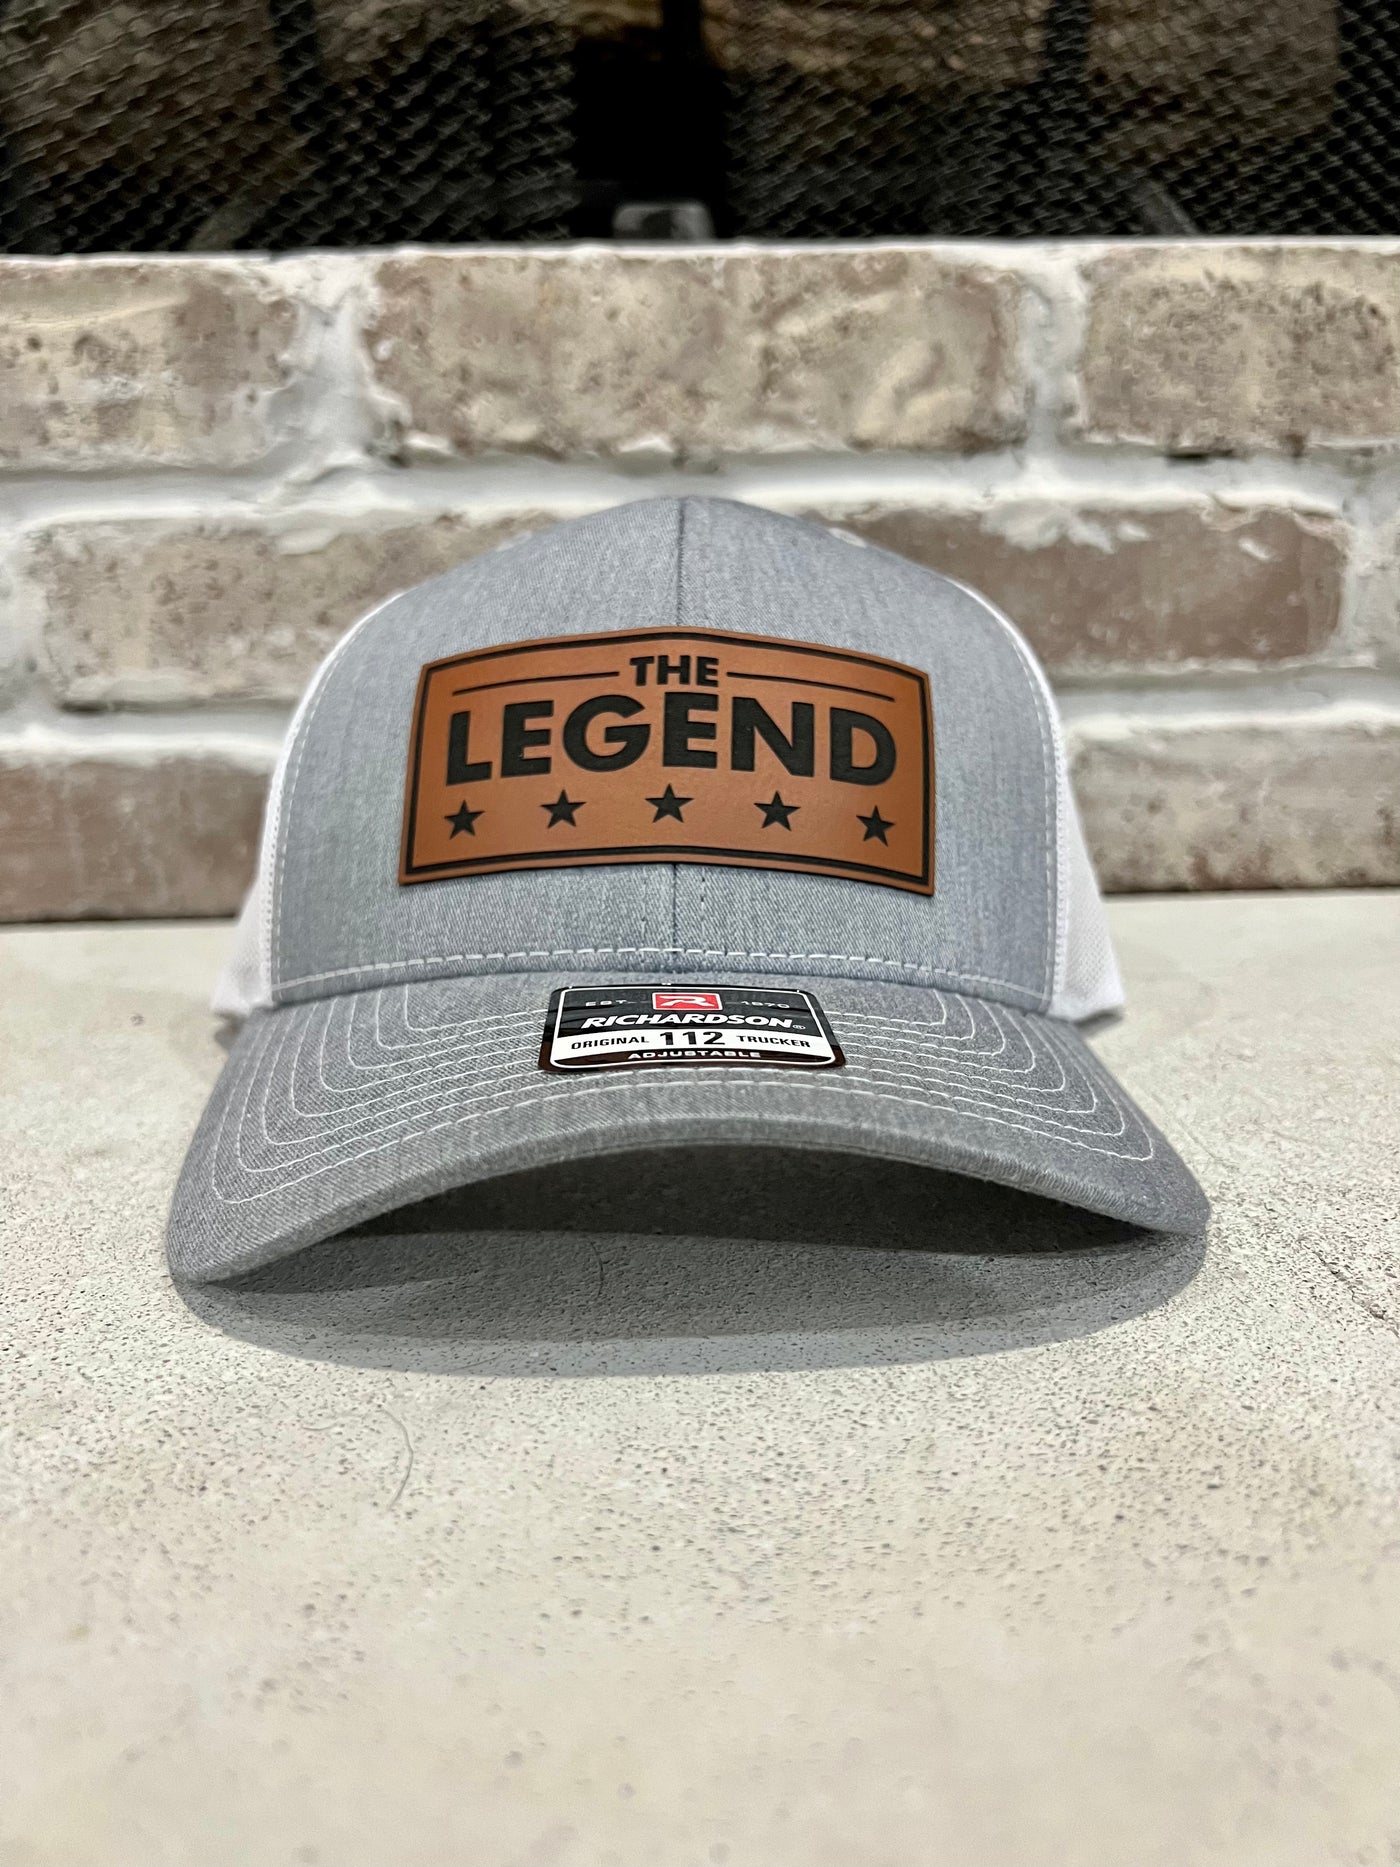 Legend/Legacy Snapbacks